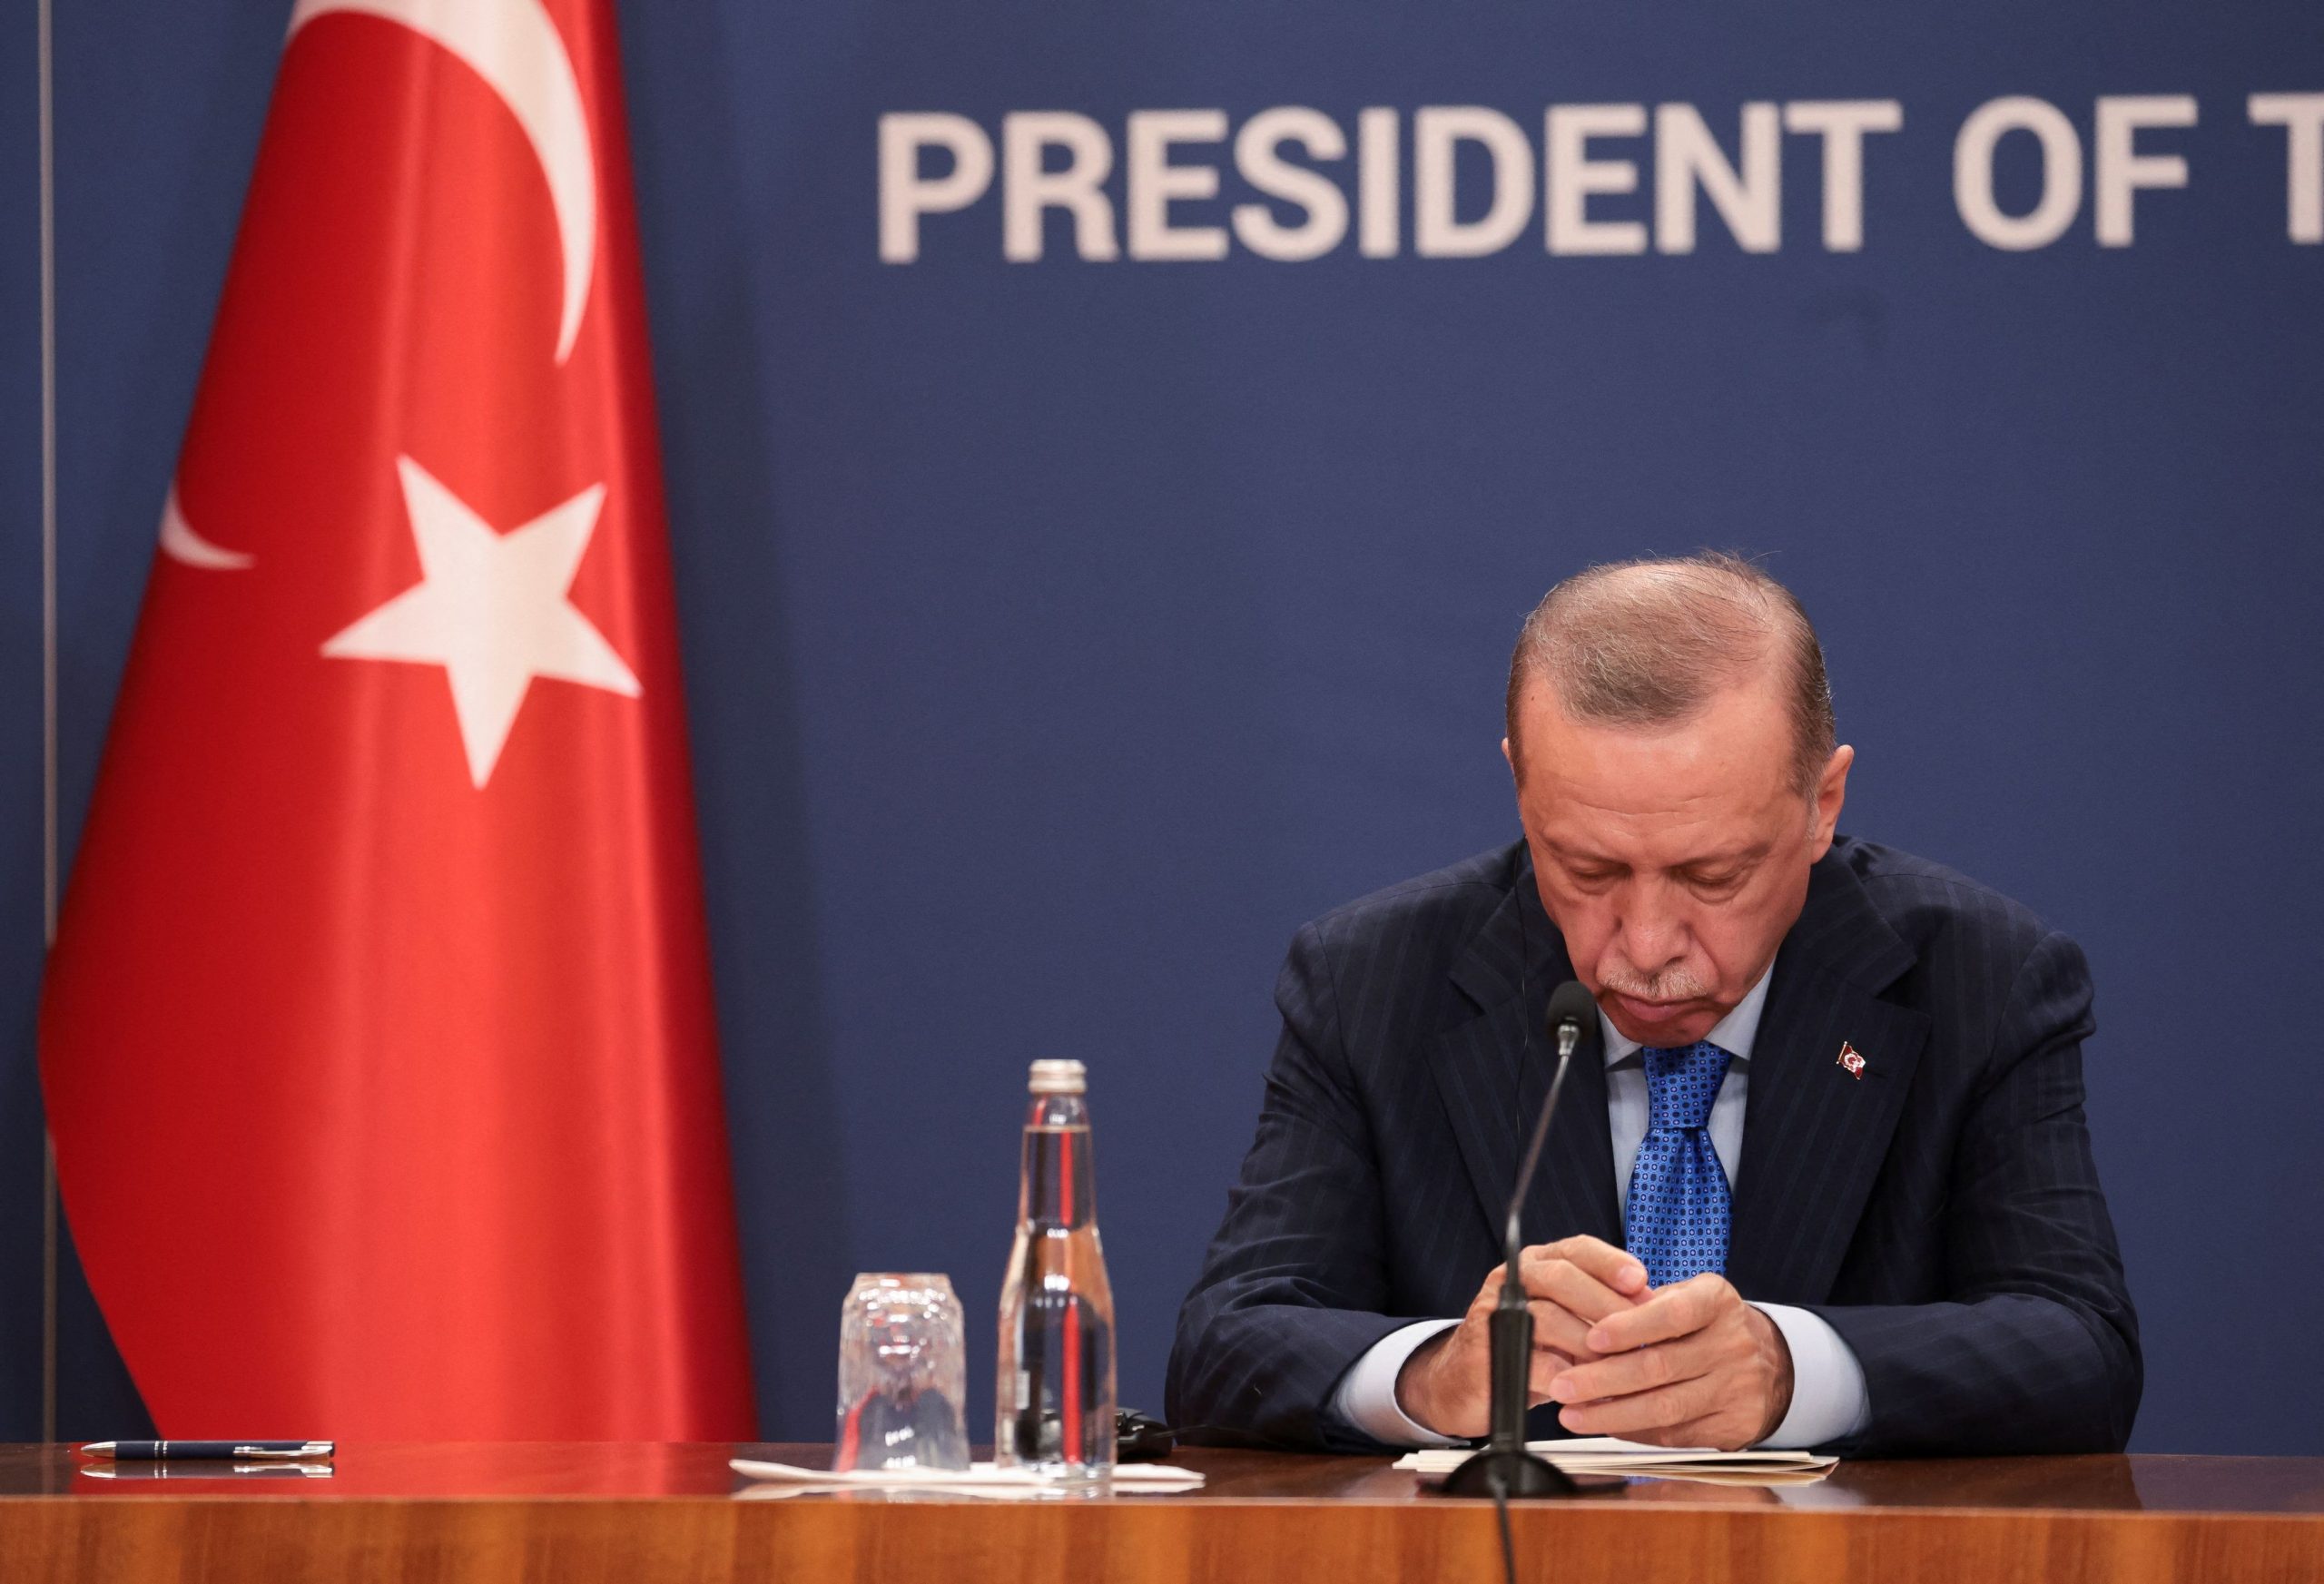 Economist political editor Peet: Risk of Turkey moving towards dictatorship